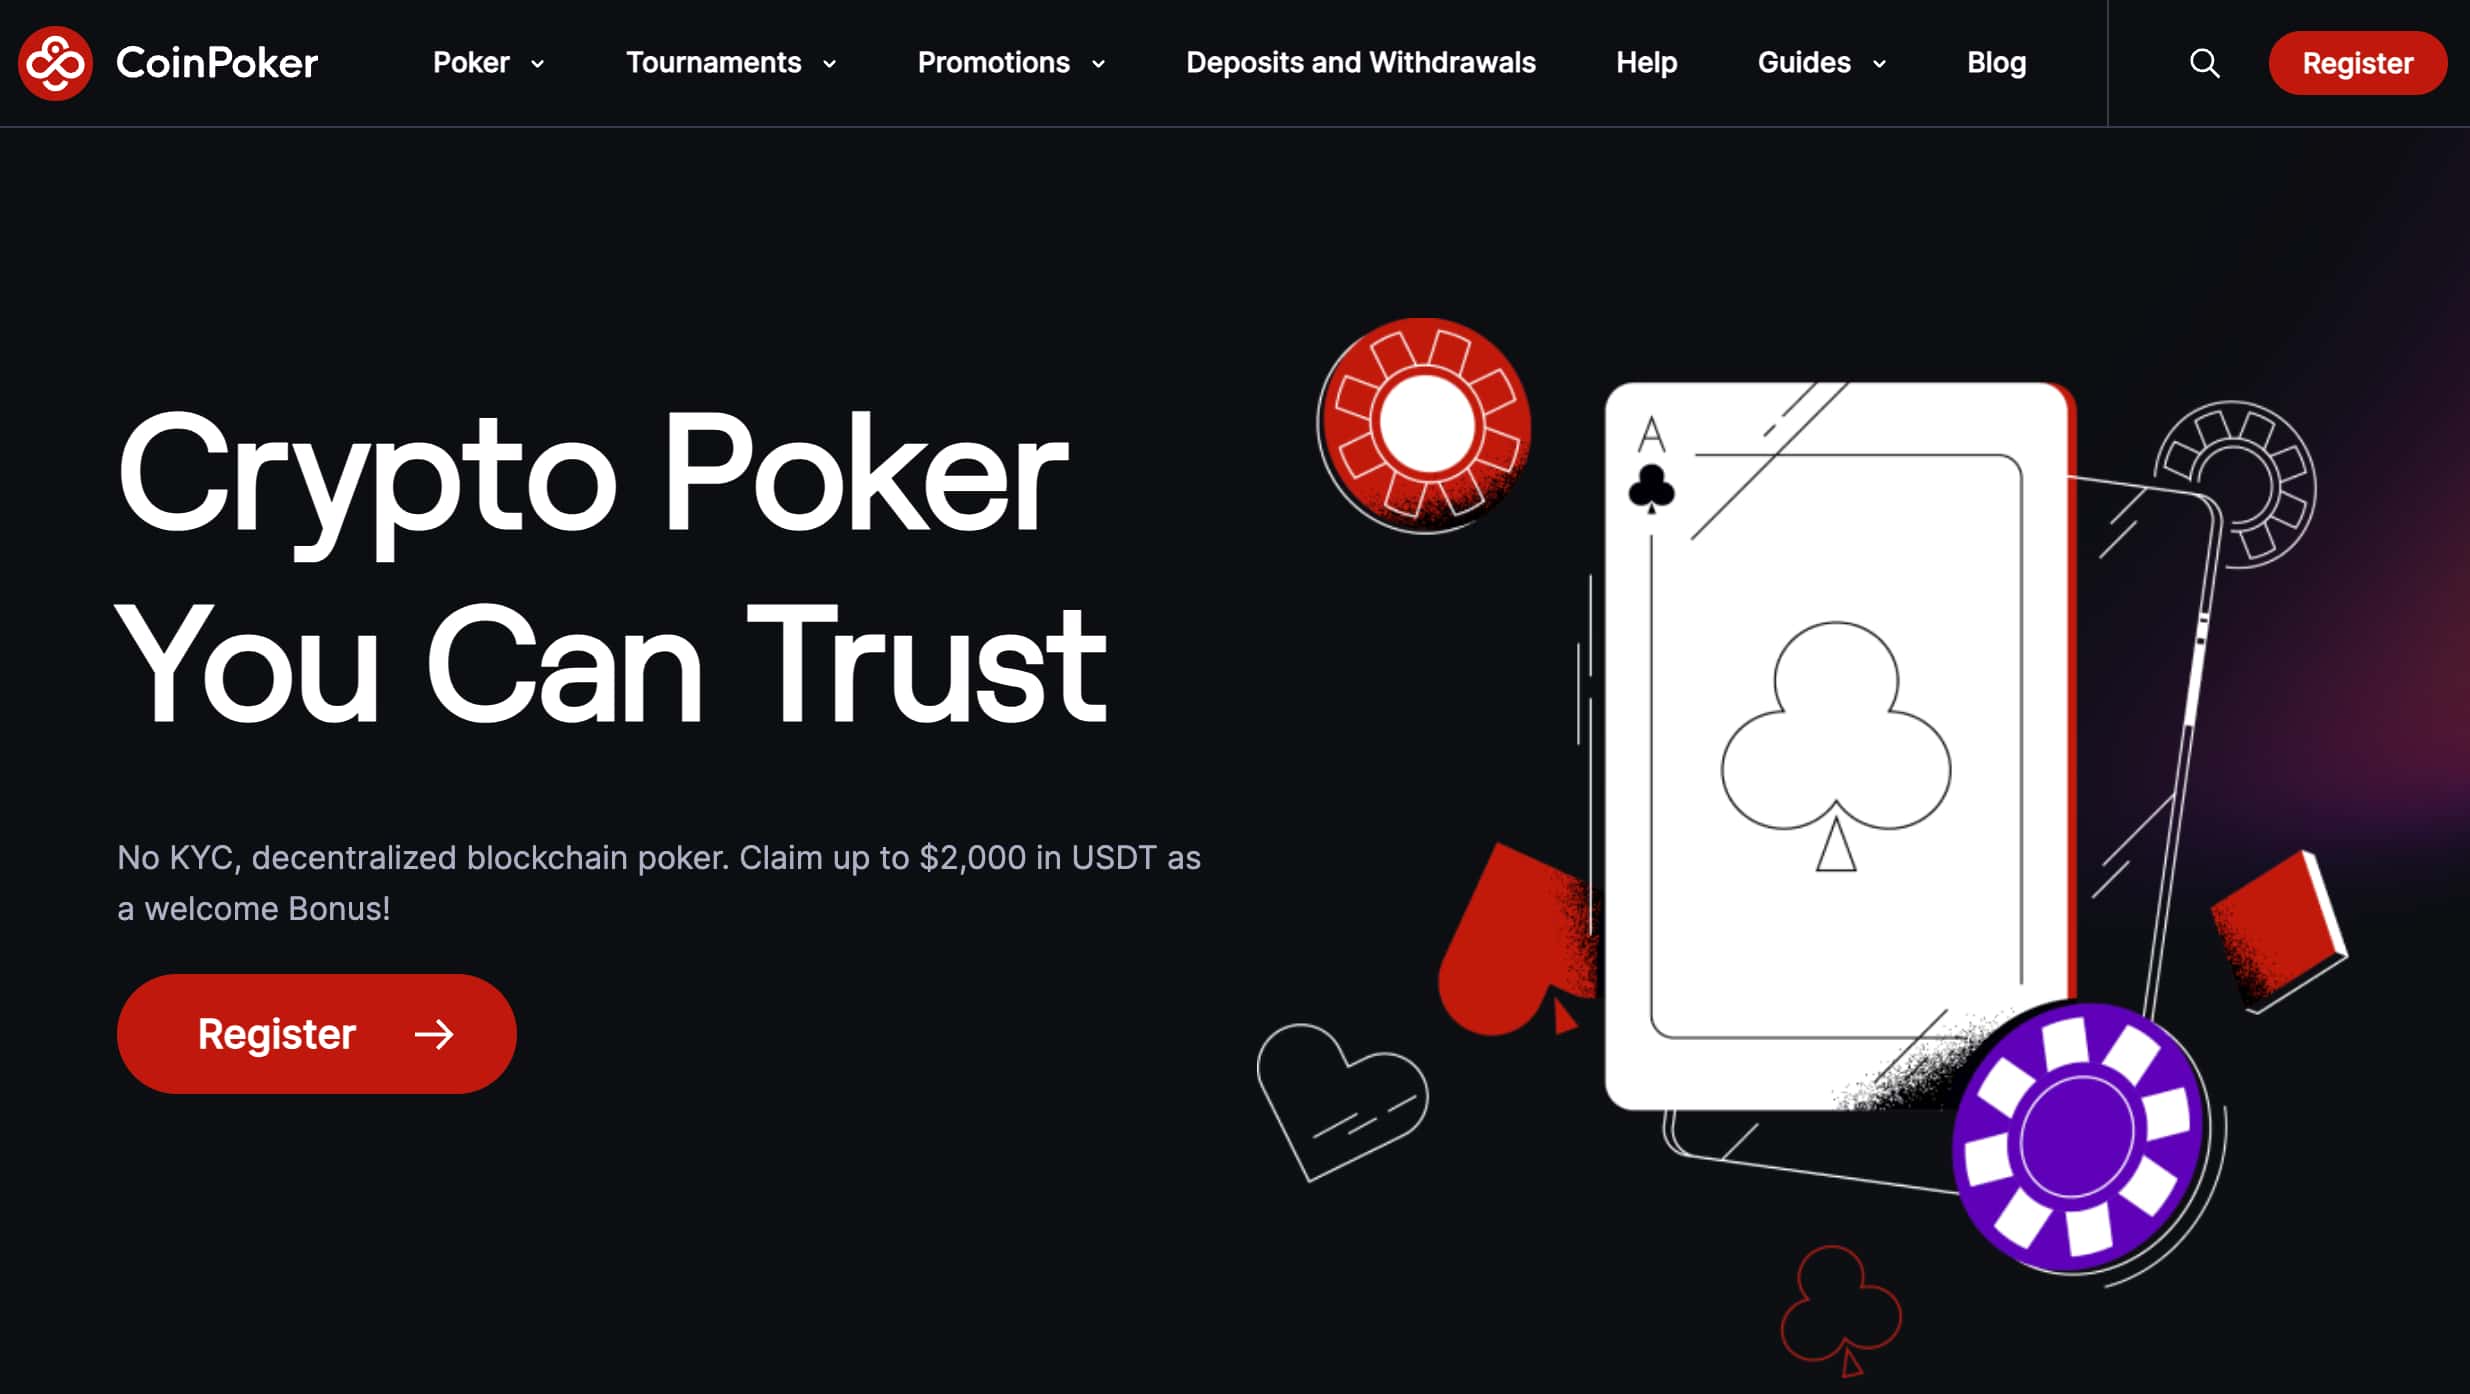 coinpoker krypto casino poker frontpage